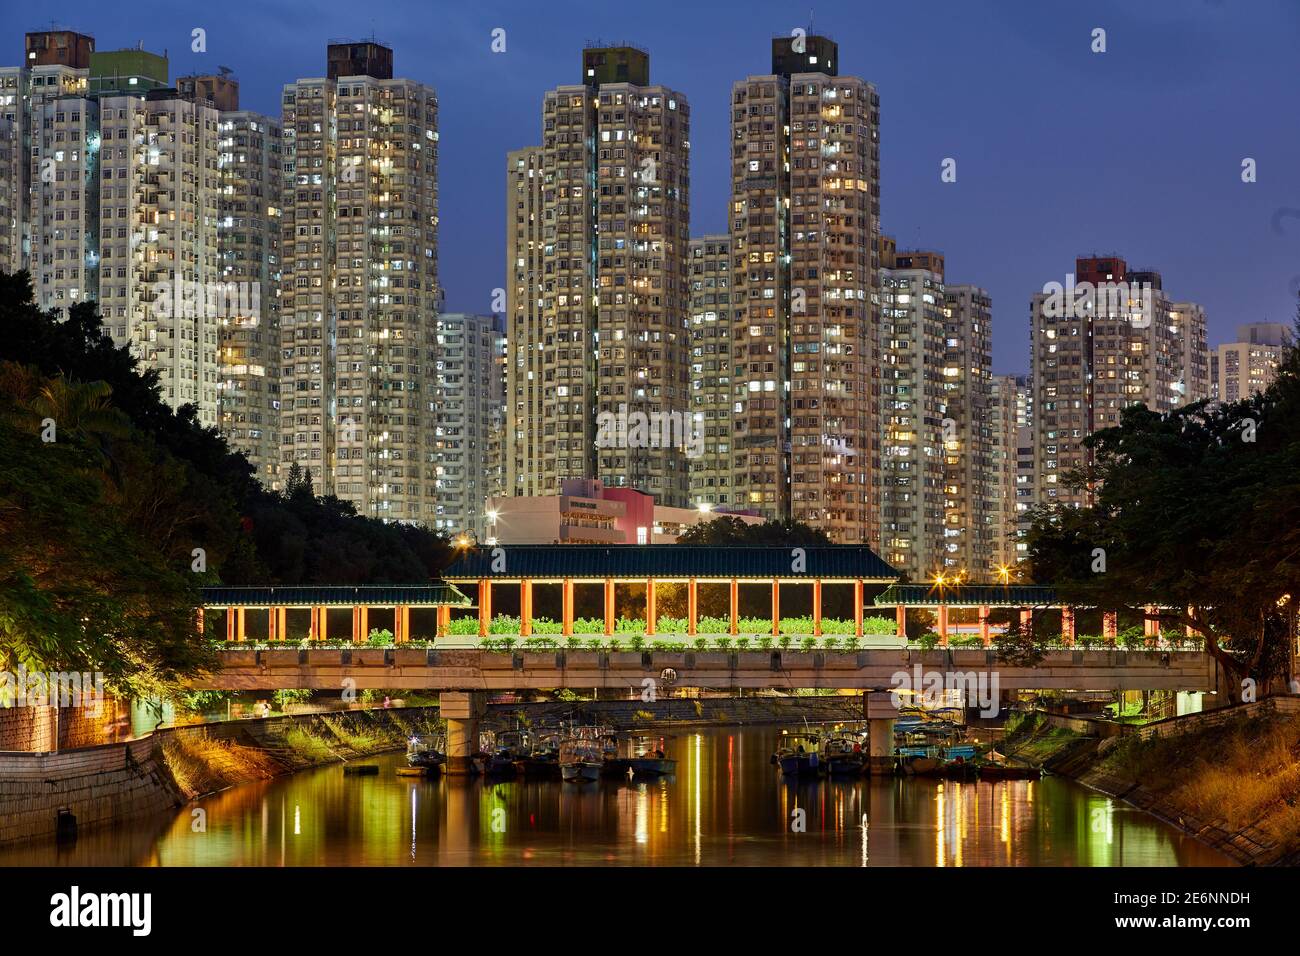 Bridge across the Lam Tsuen River in Tai Po with high rise residential apartment blocks. New Territories, Hong Kong Stock Photo